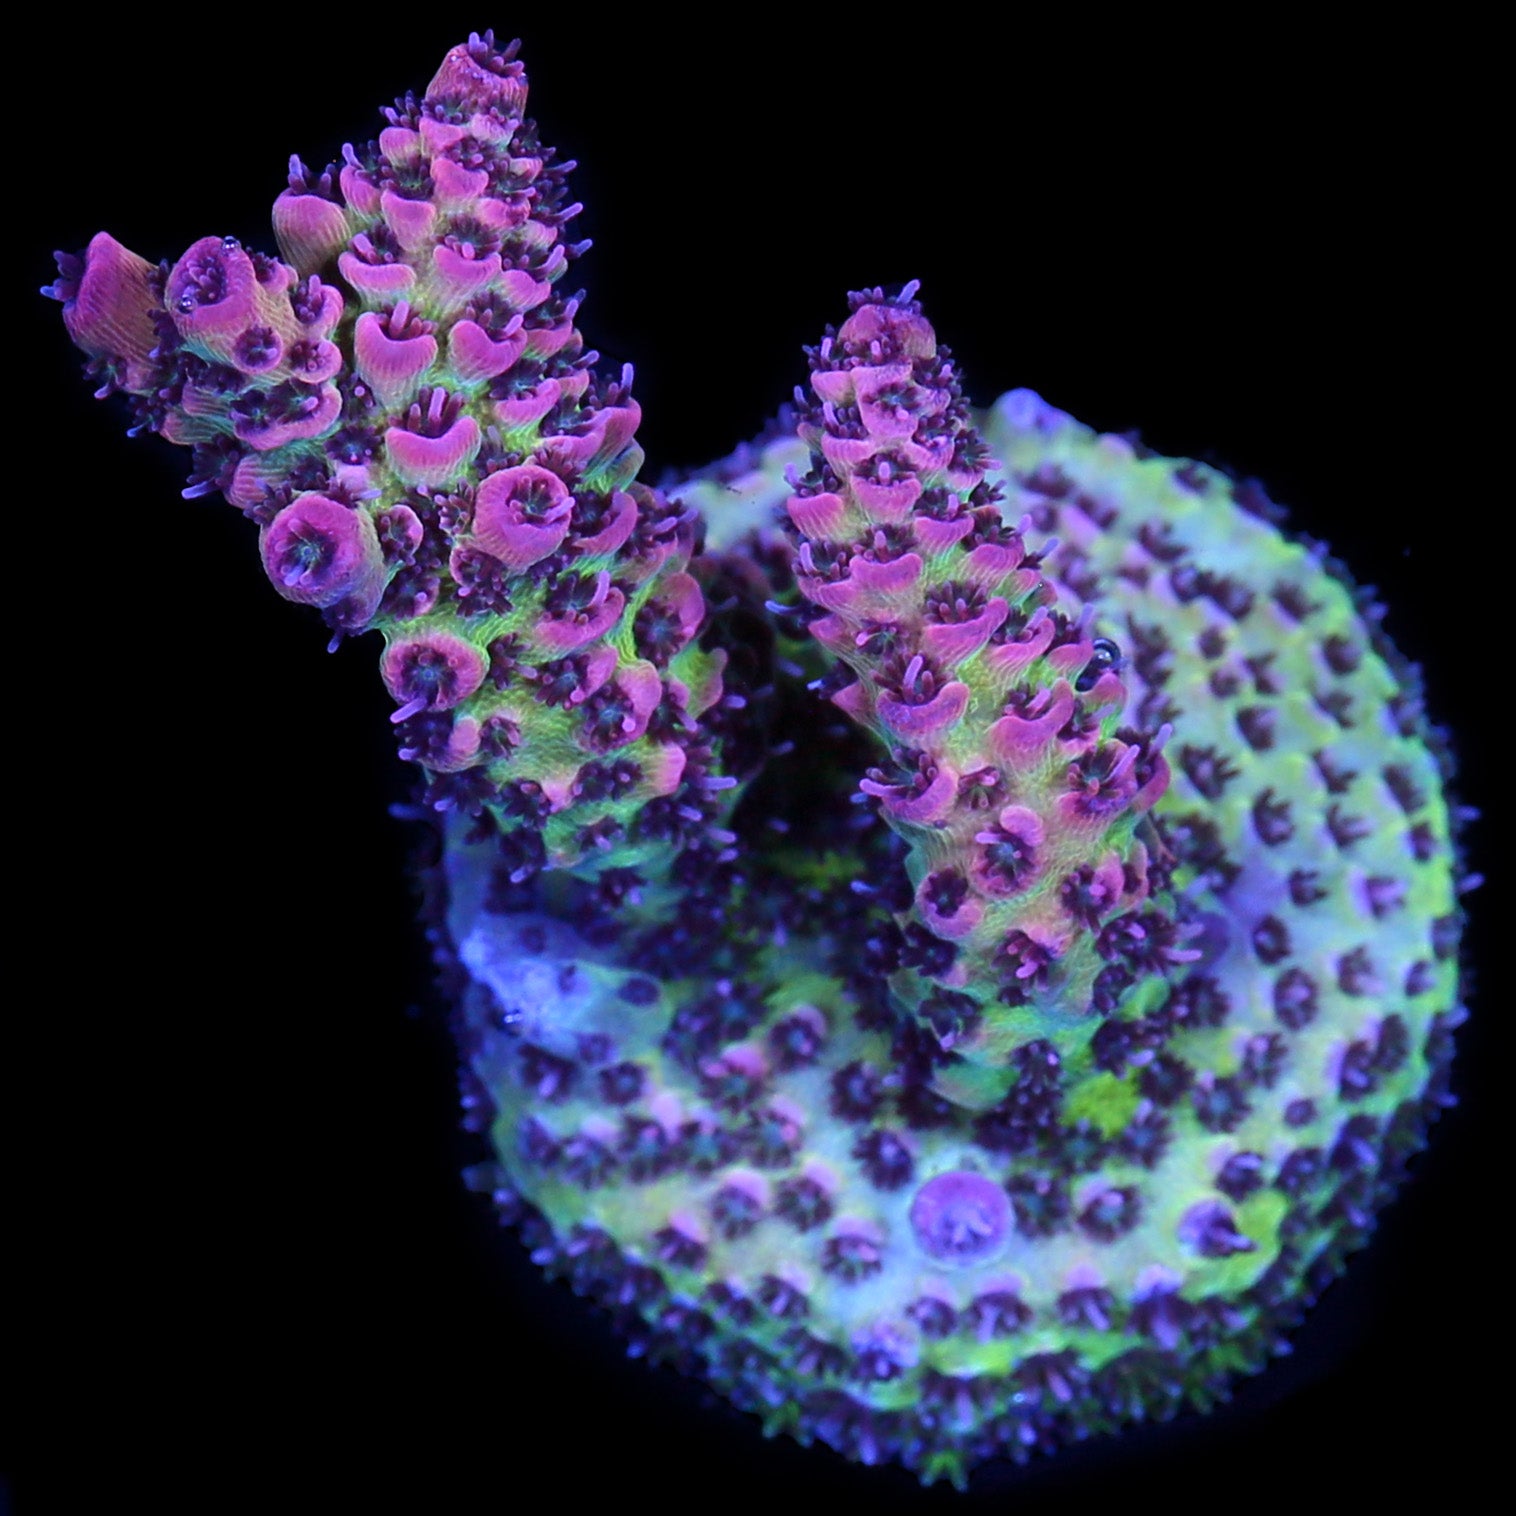 Festive Acropora Coral